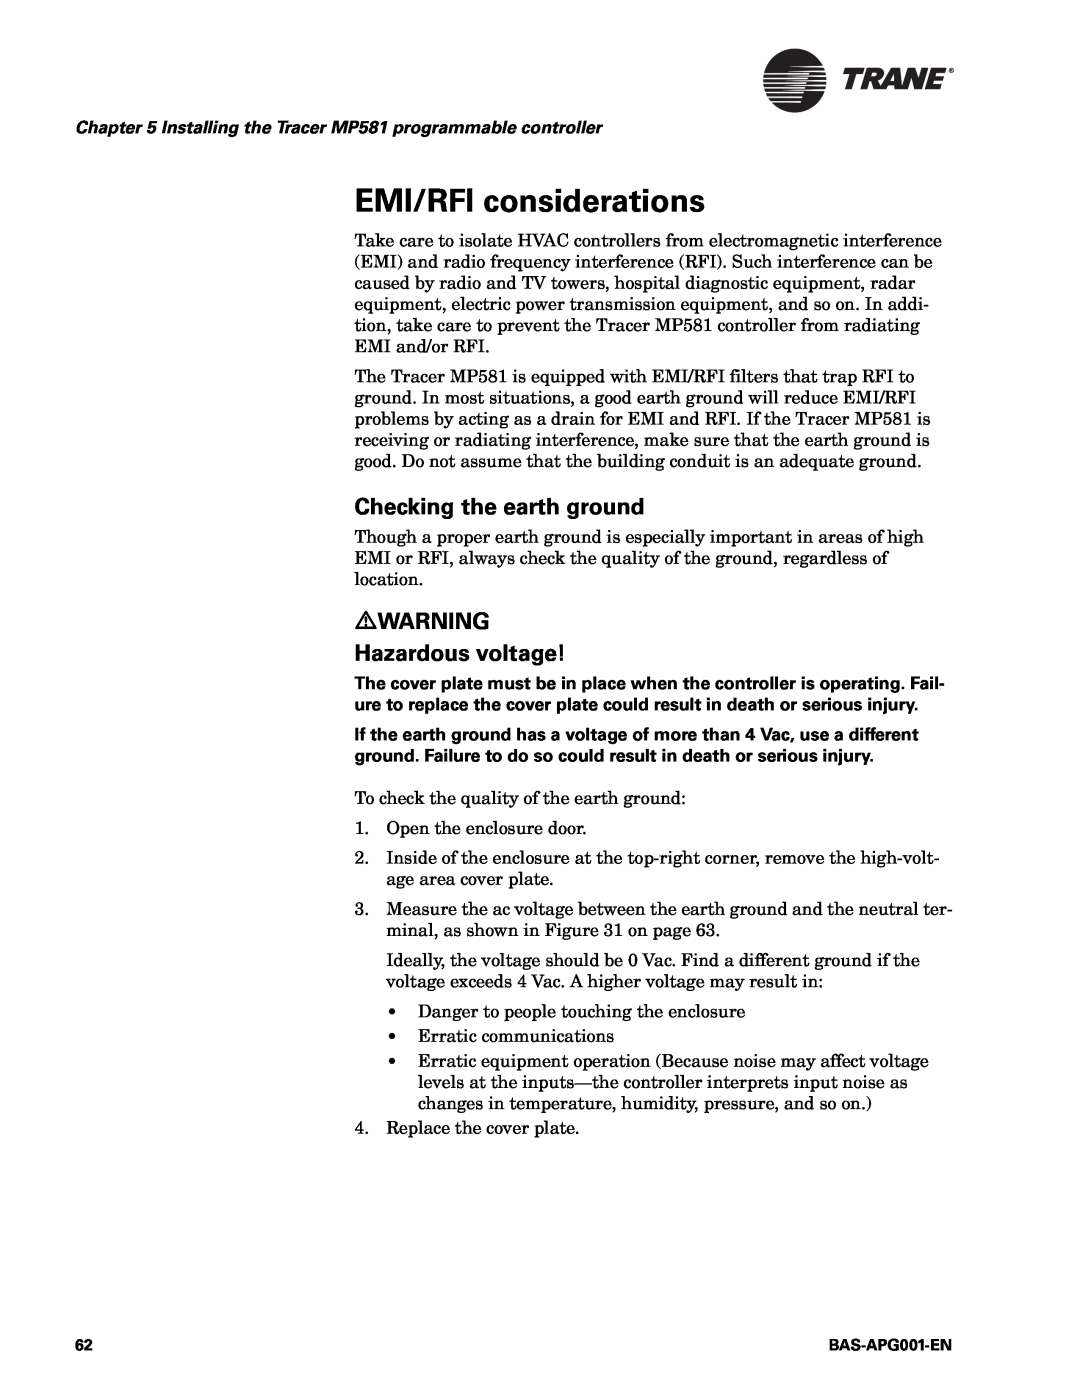 Trane BAS-APG001-EN manual EMI/RFI considerations, Checking the earth ground, Hazardous voltage 